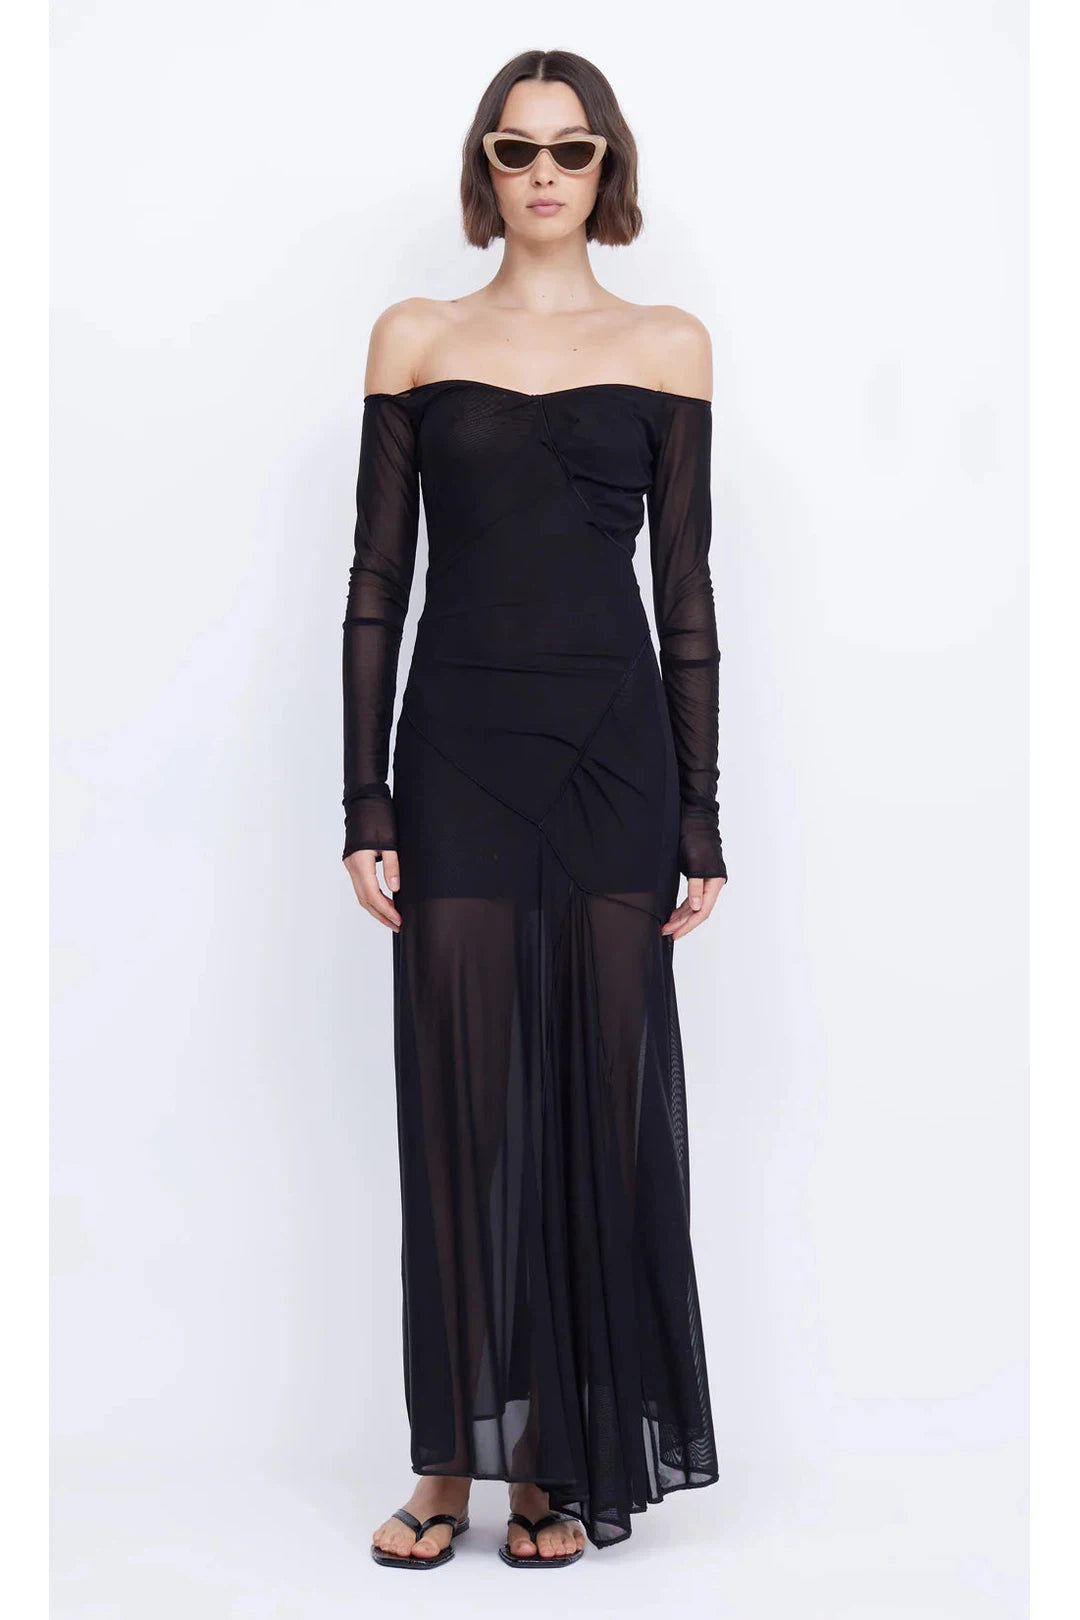 Isadora long sleeve dress, black